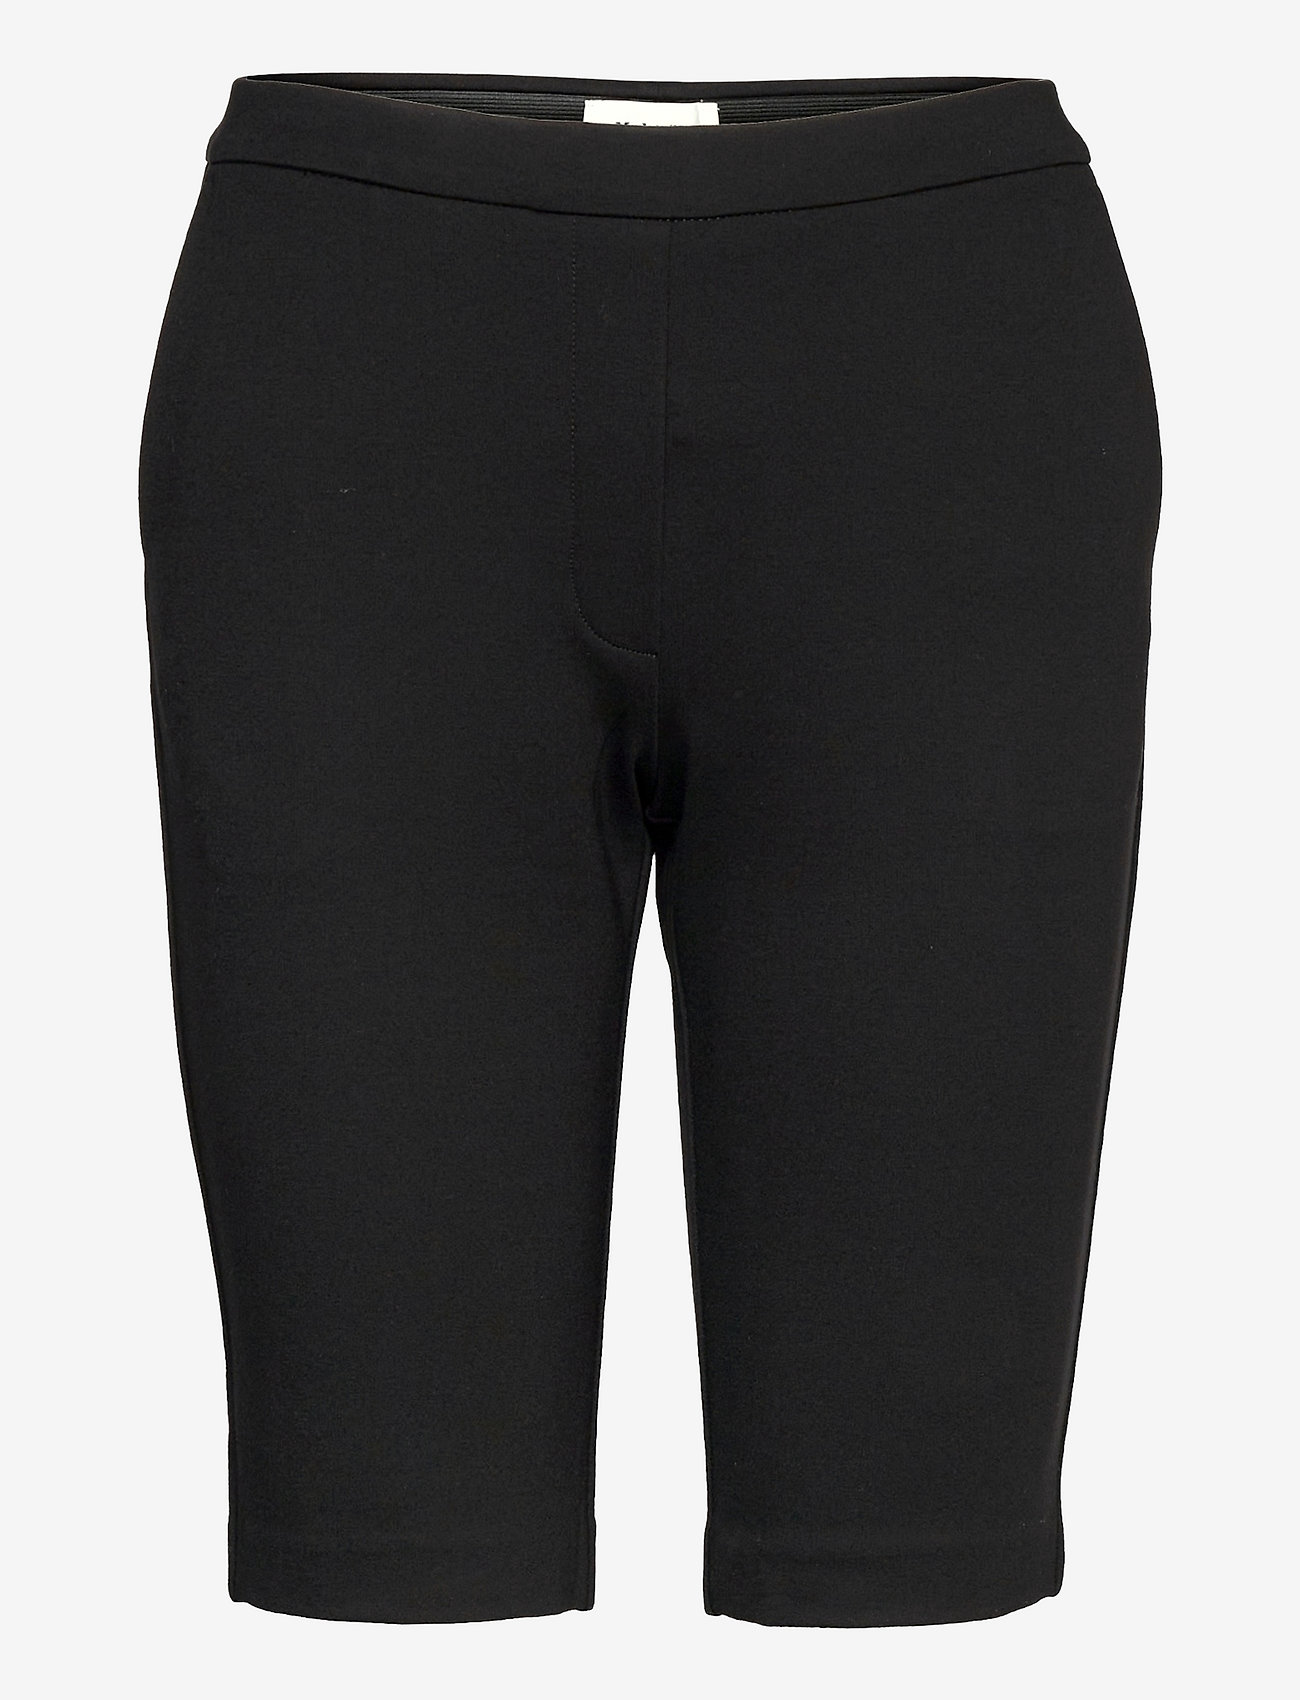 Modström - Tanny shorts - cycling shorts - black - 0